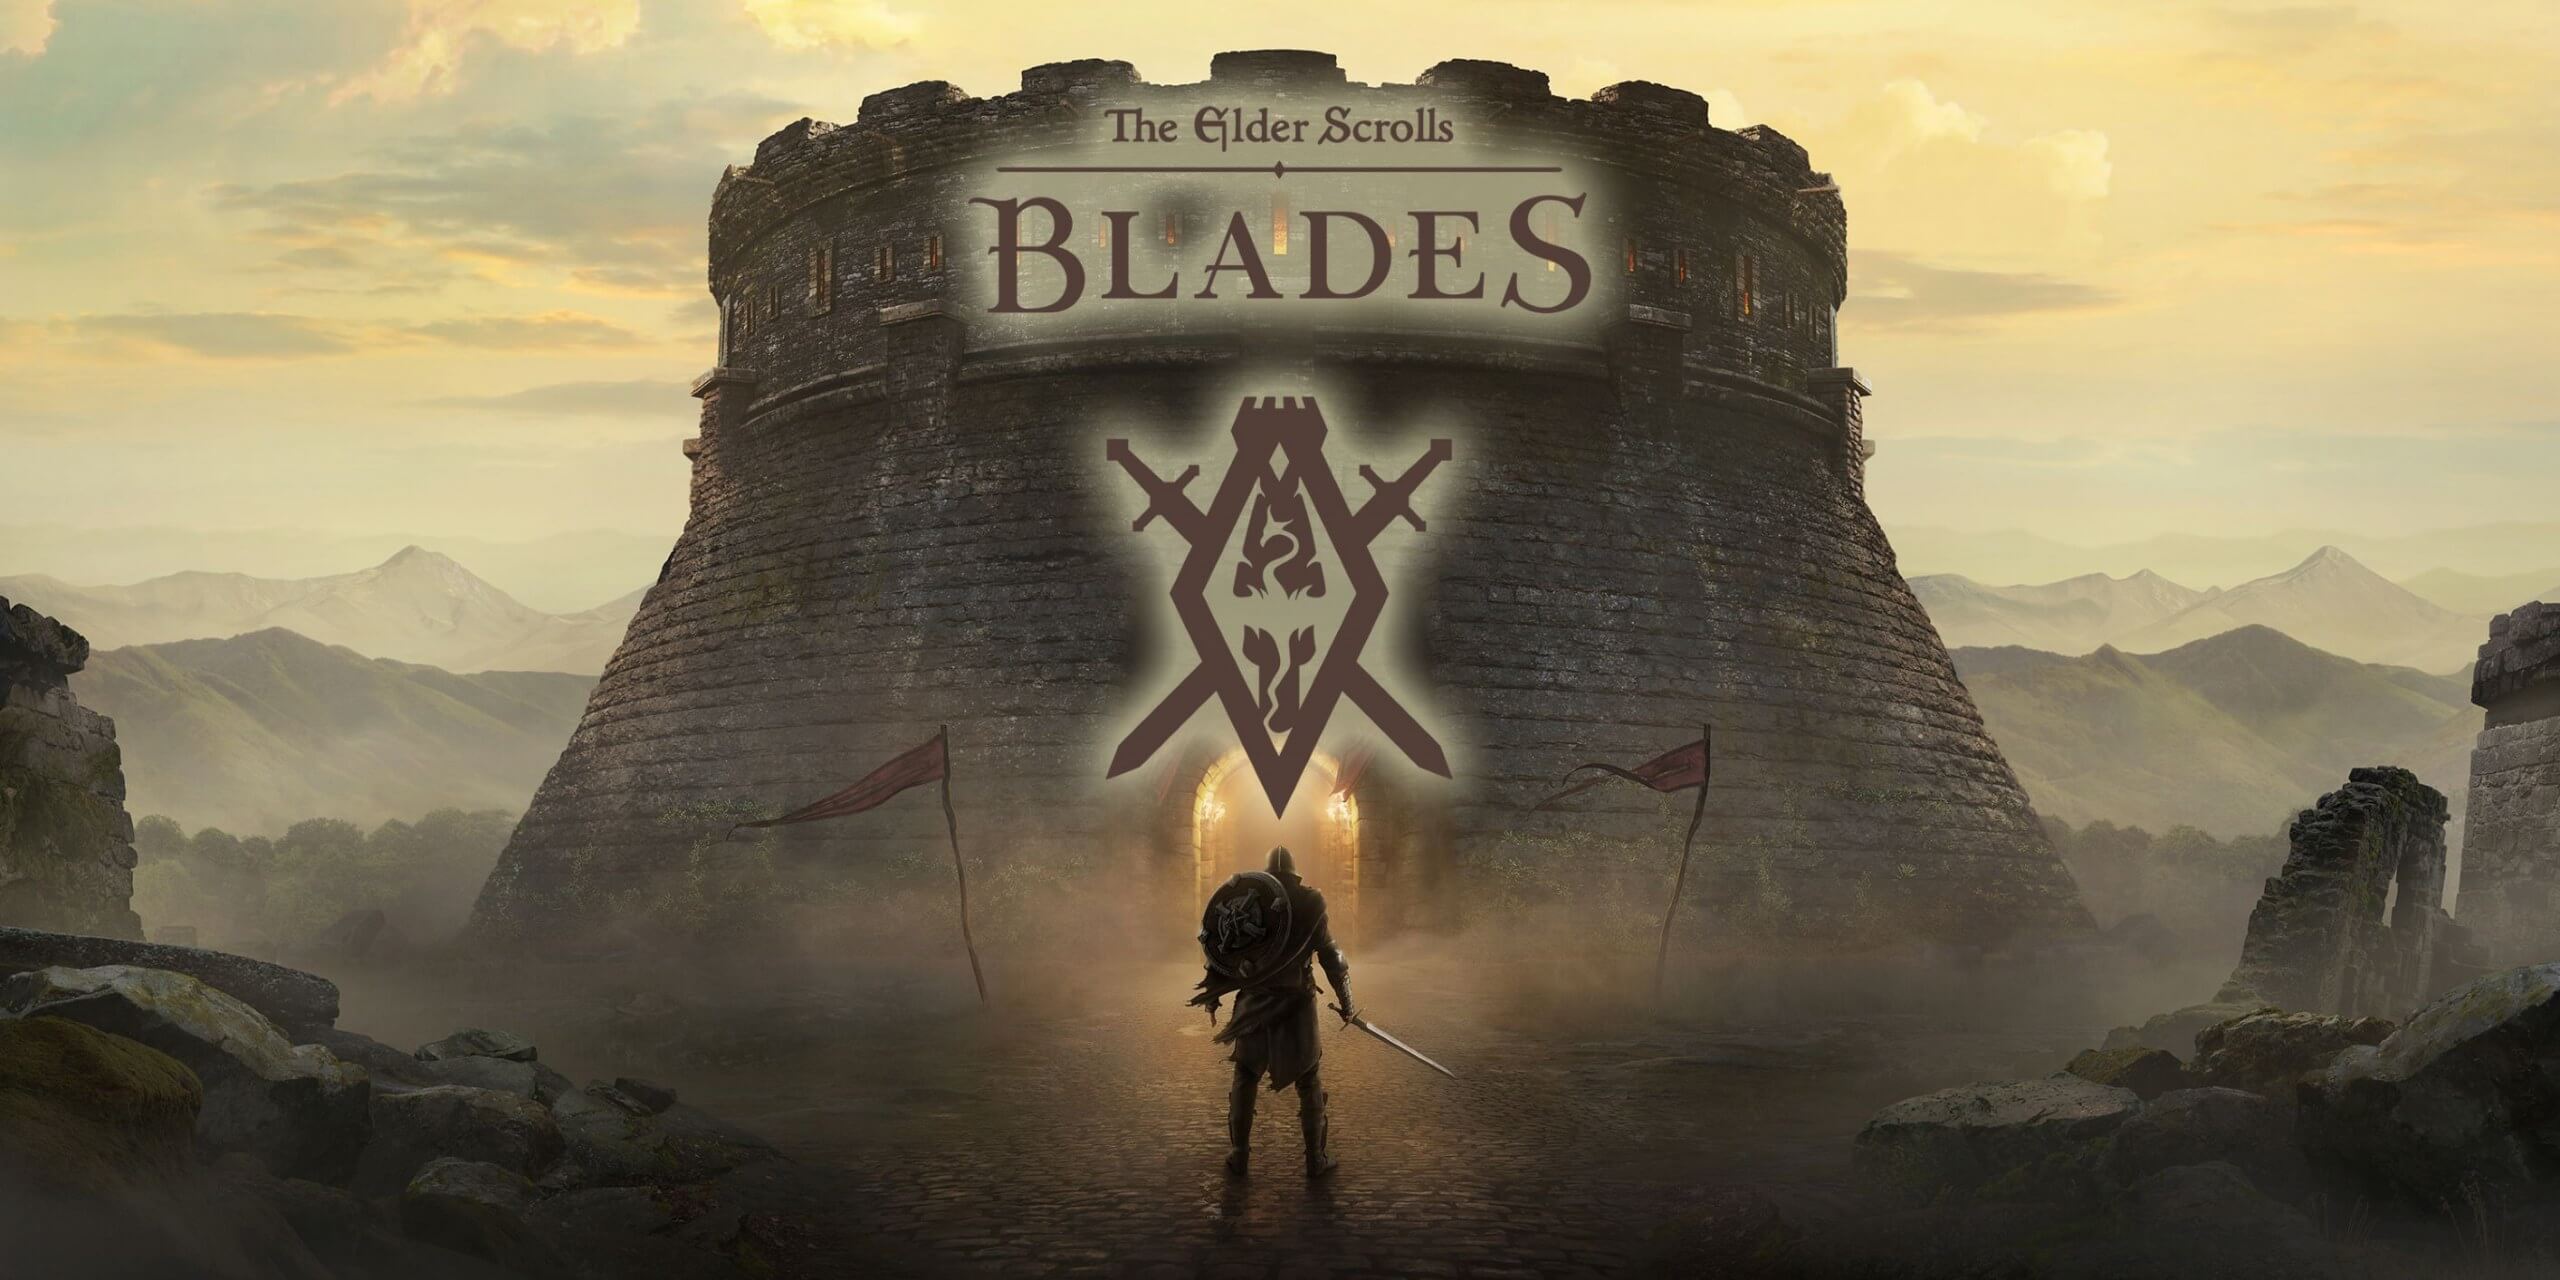 The Elder Scrolls: Blades made $1.5 million in its first month